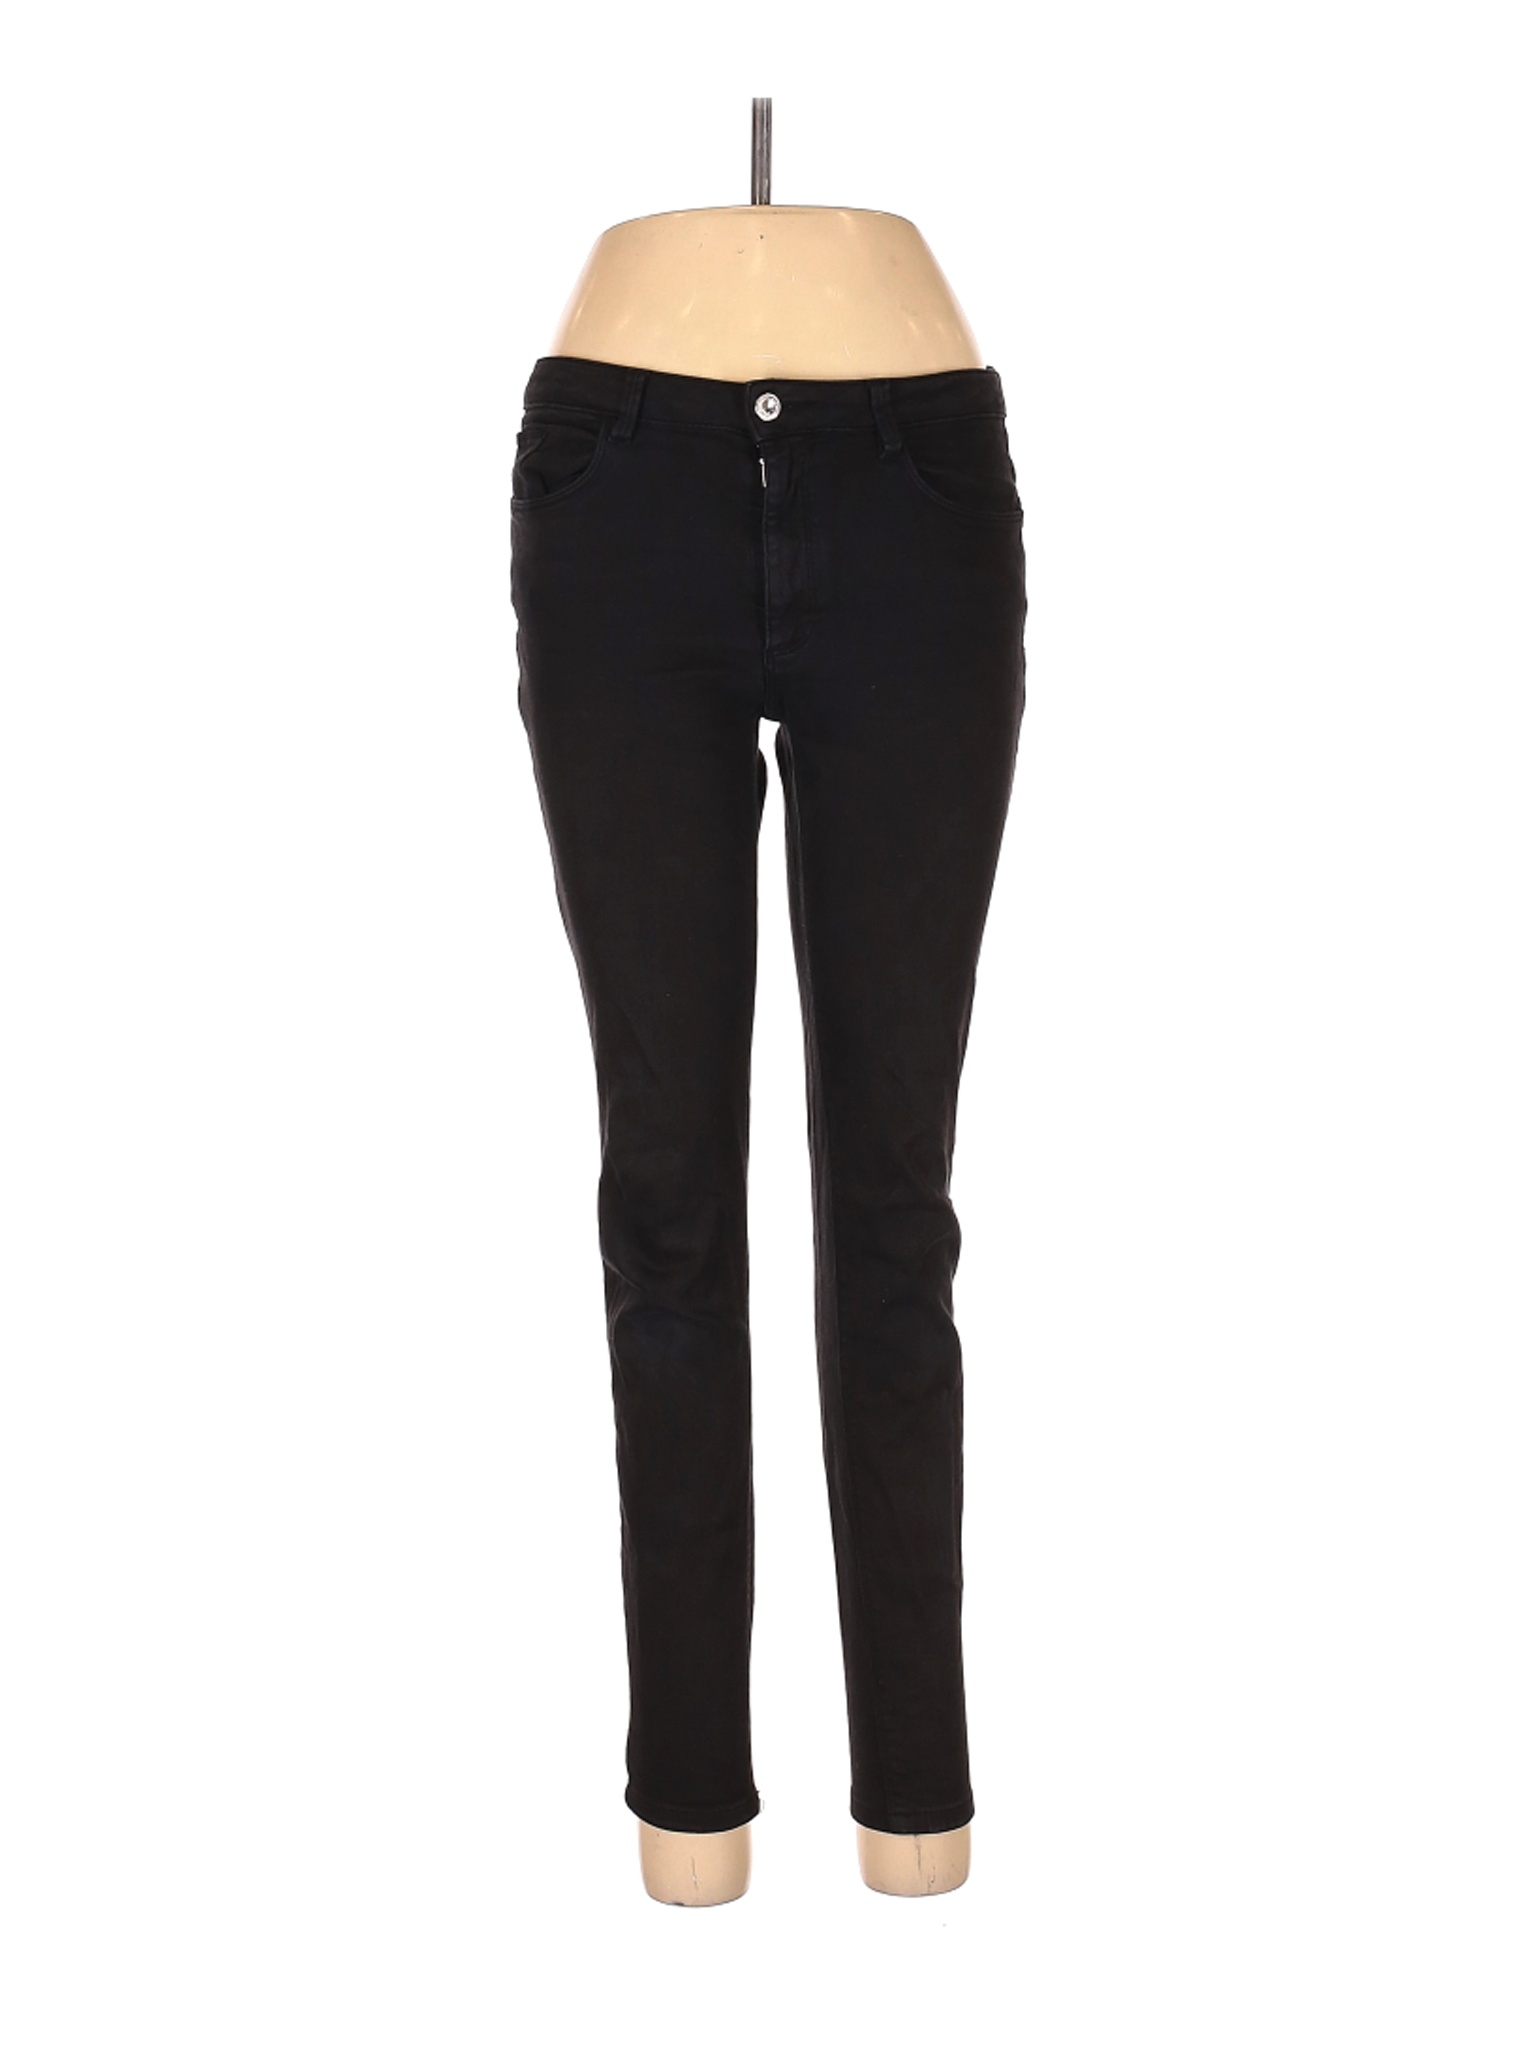 Zara Basic Women Black Jeans 10 | eBay